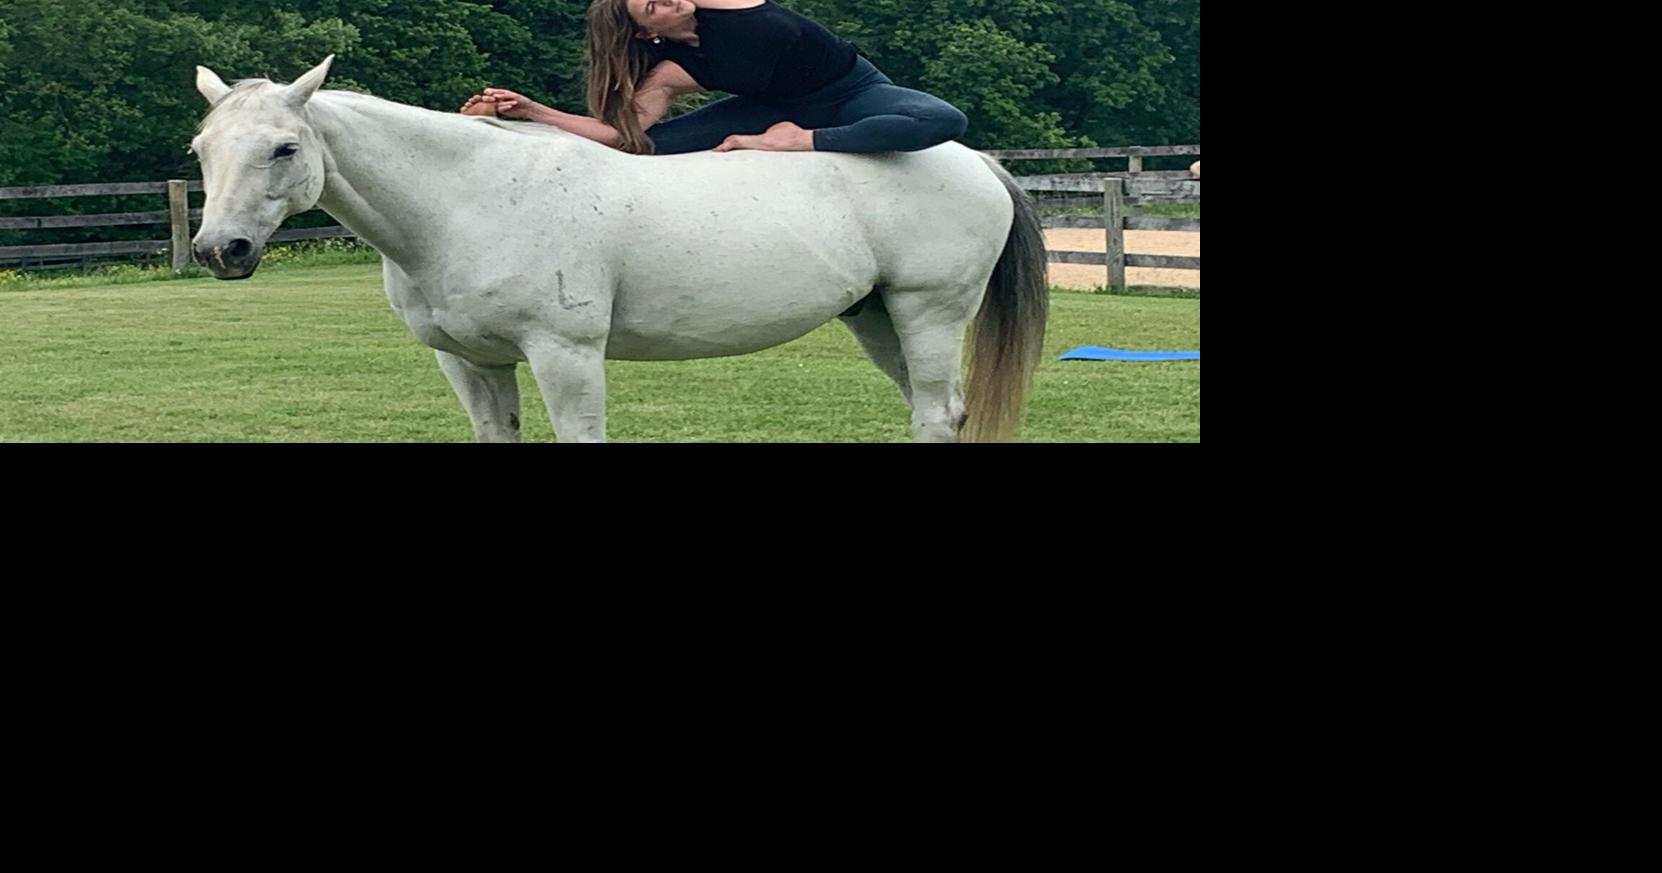 ‘Namast-neigh’ I Horse Yoga retreat piques interest in Kentucky